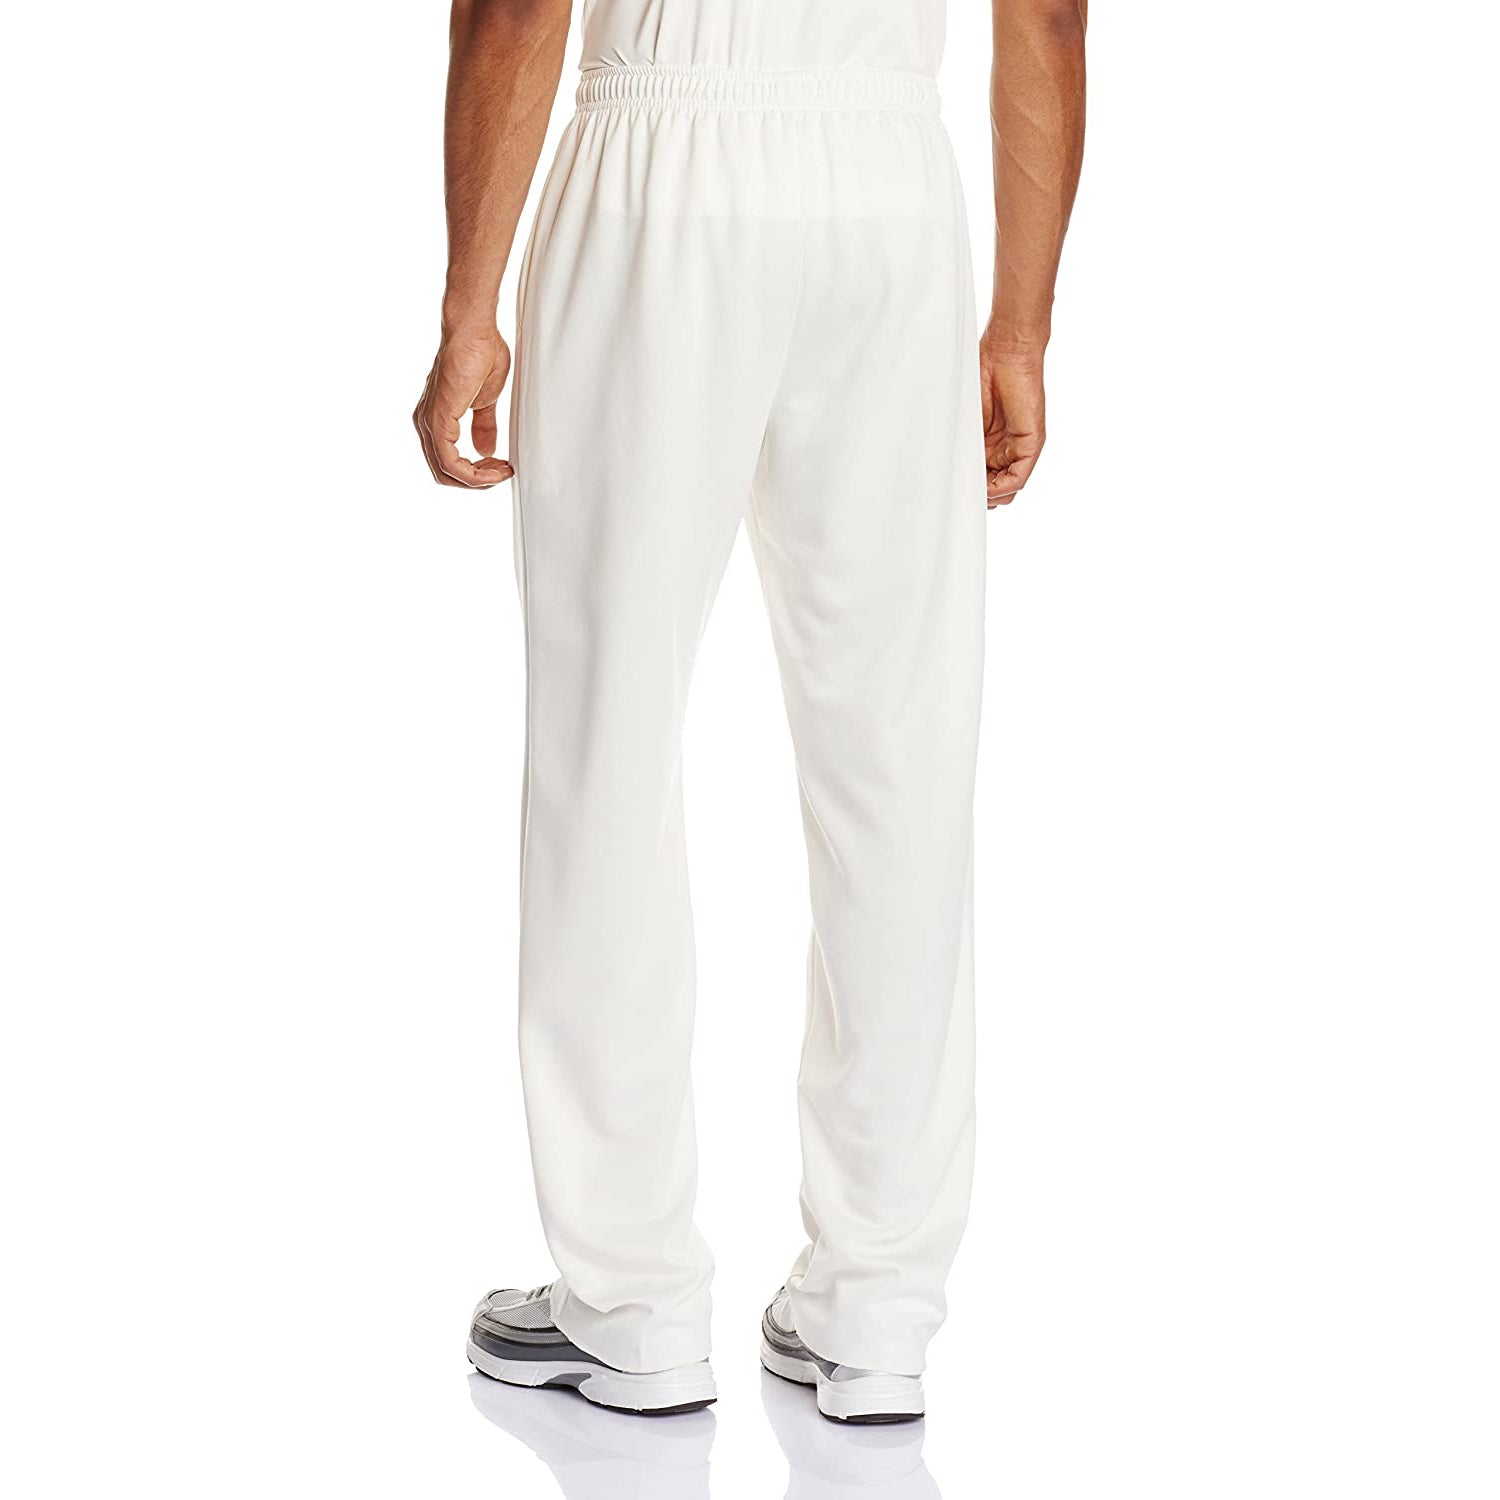 SG Club Cricket Trouser (White) - Best Price online Prokicksports.com